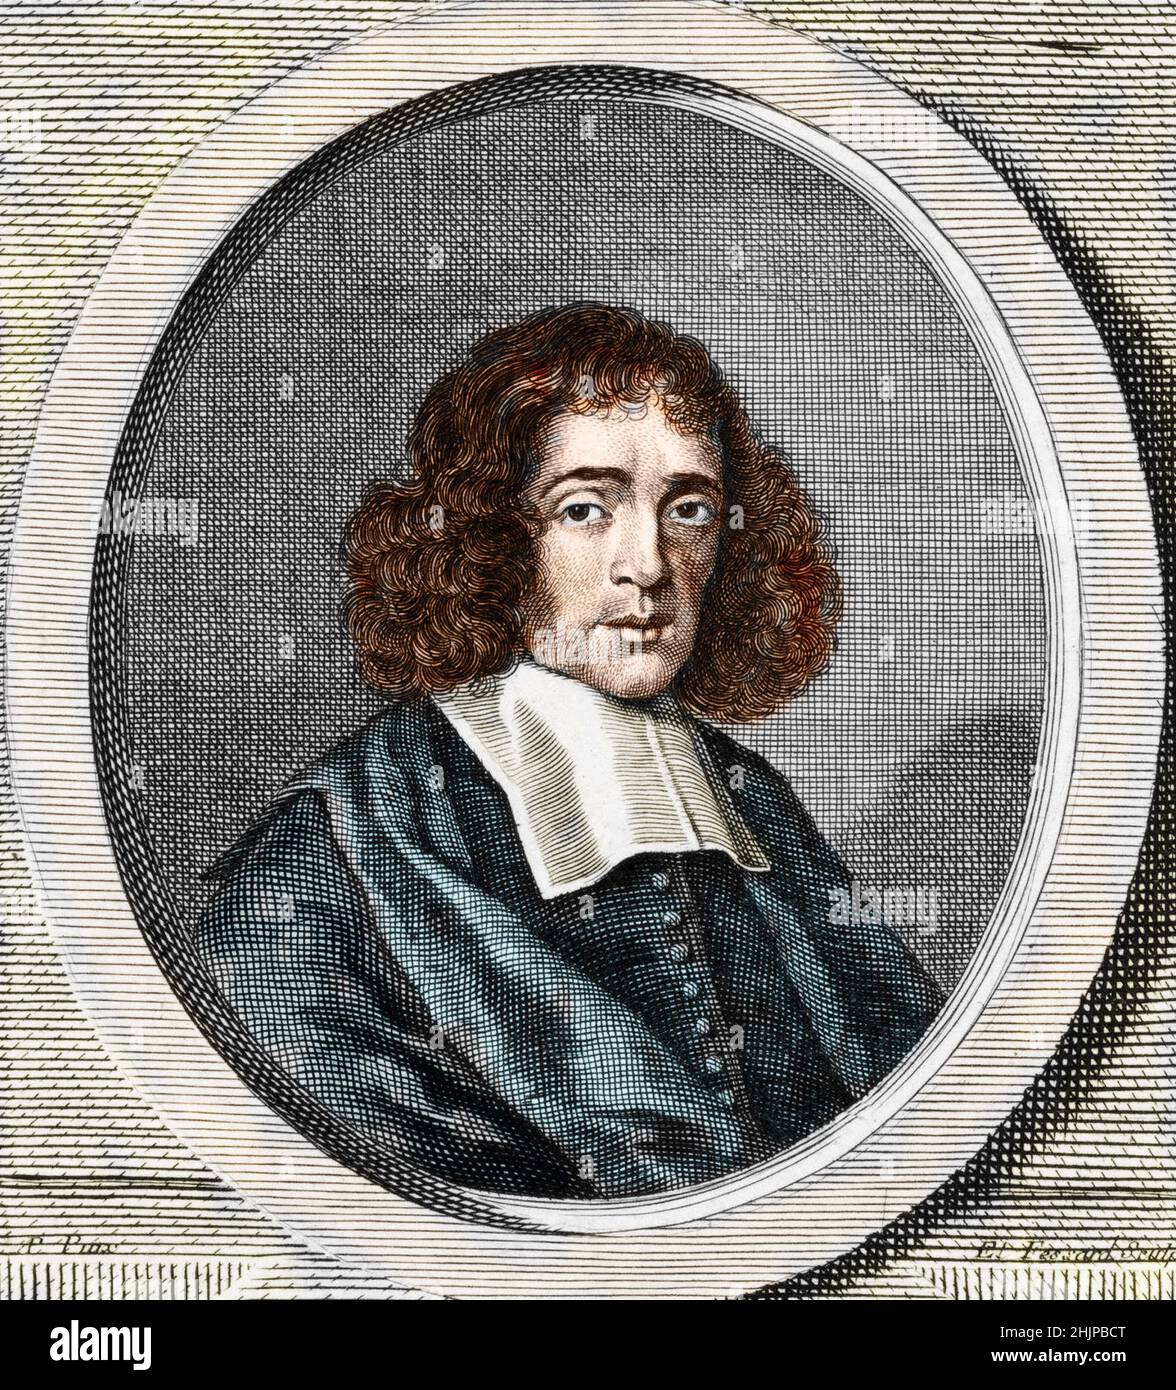 Portrait du philosophe neerlandais Baruch Spinoza (1632-1677) - gravure 19eme siecle Collection privee Stock Photo